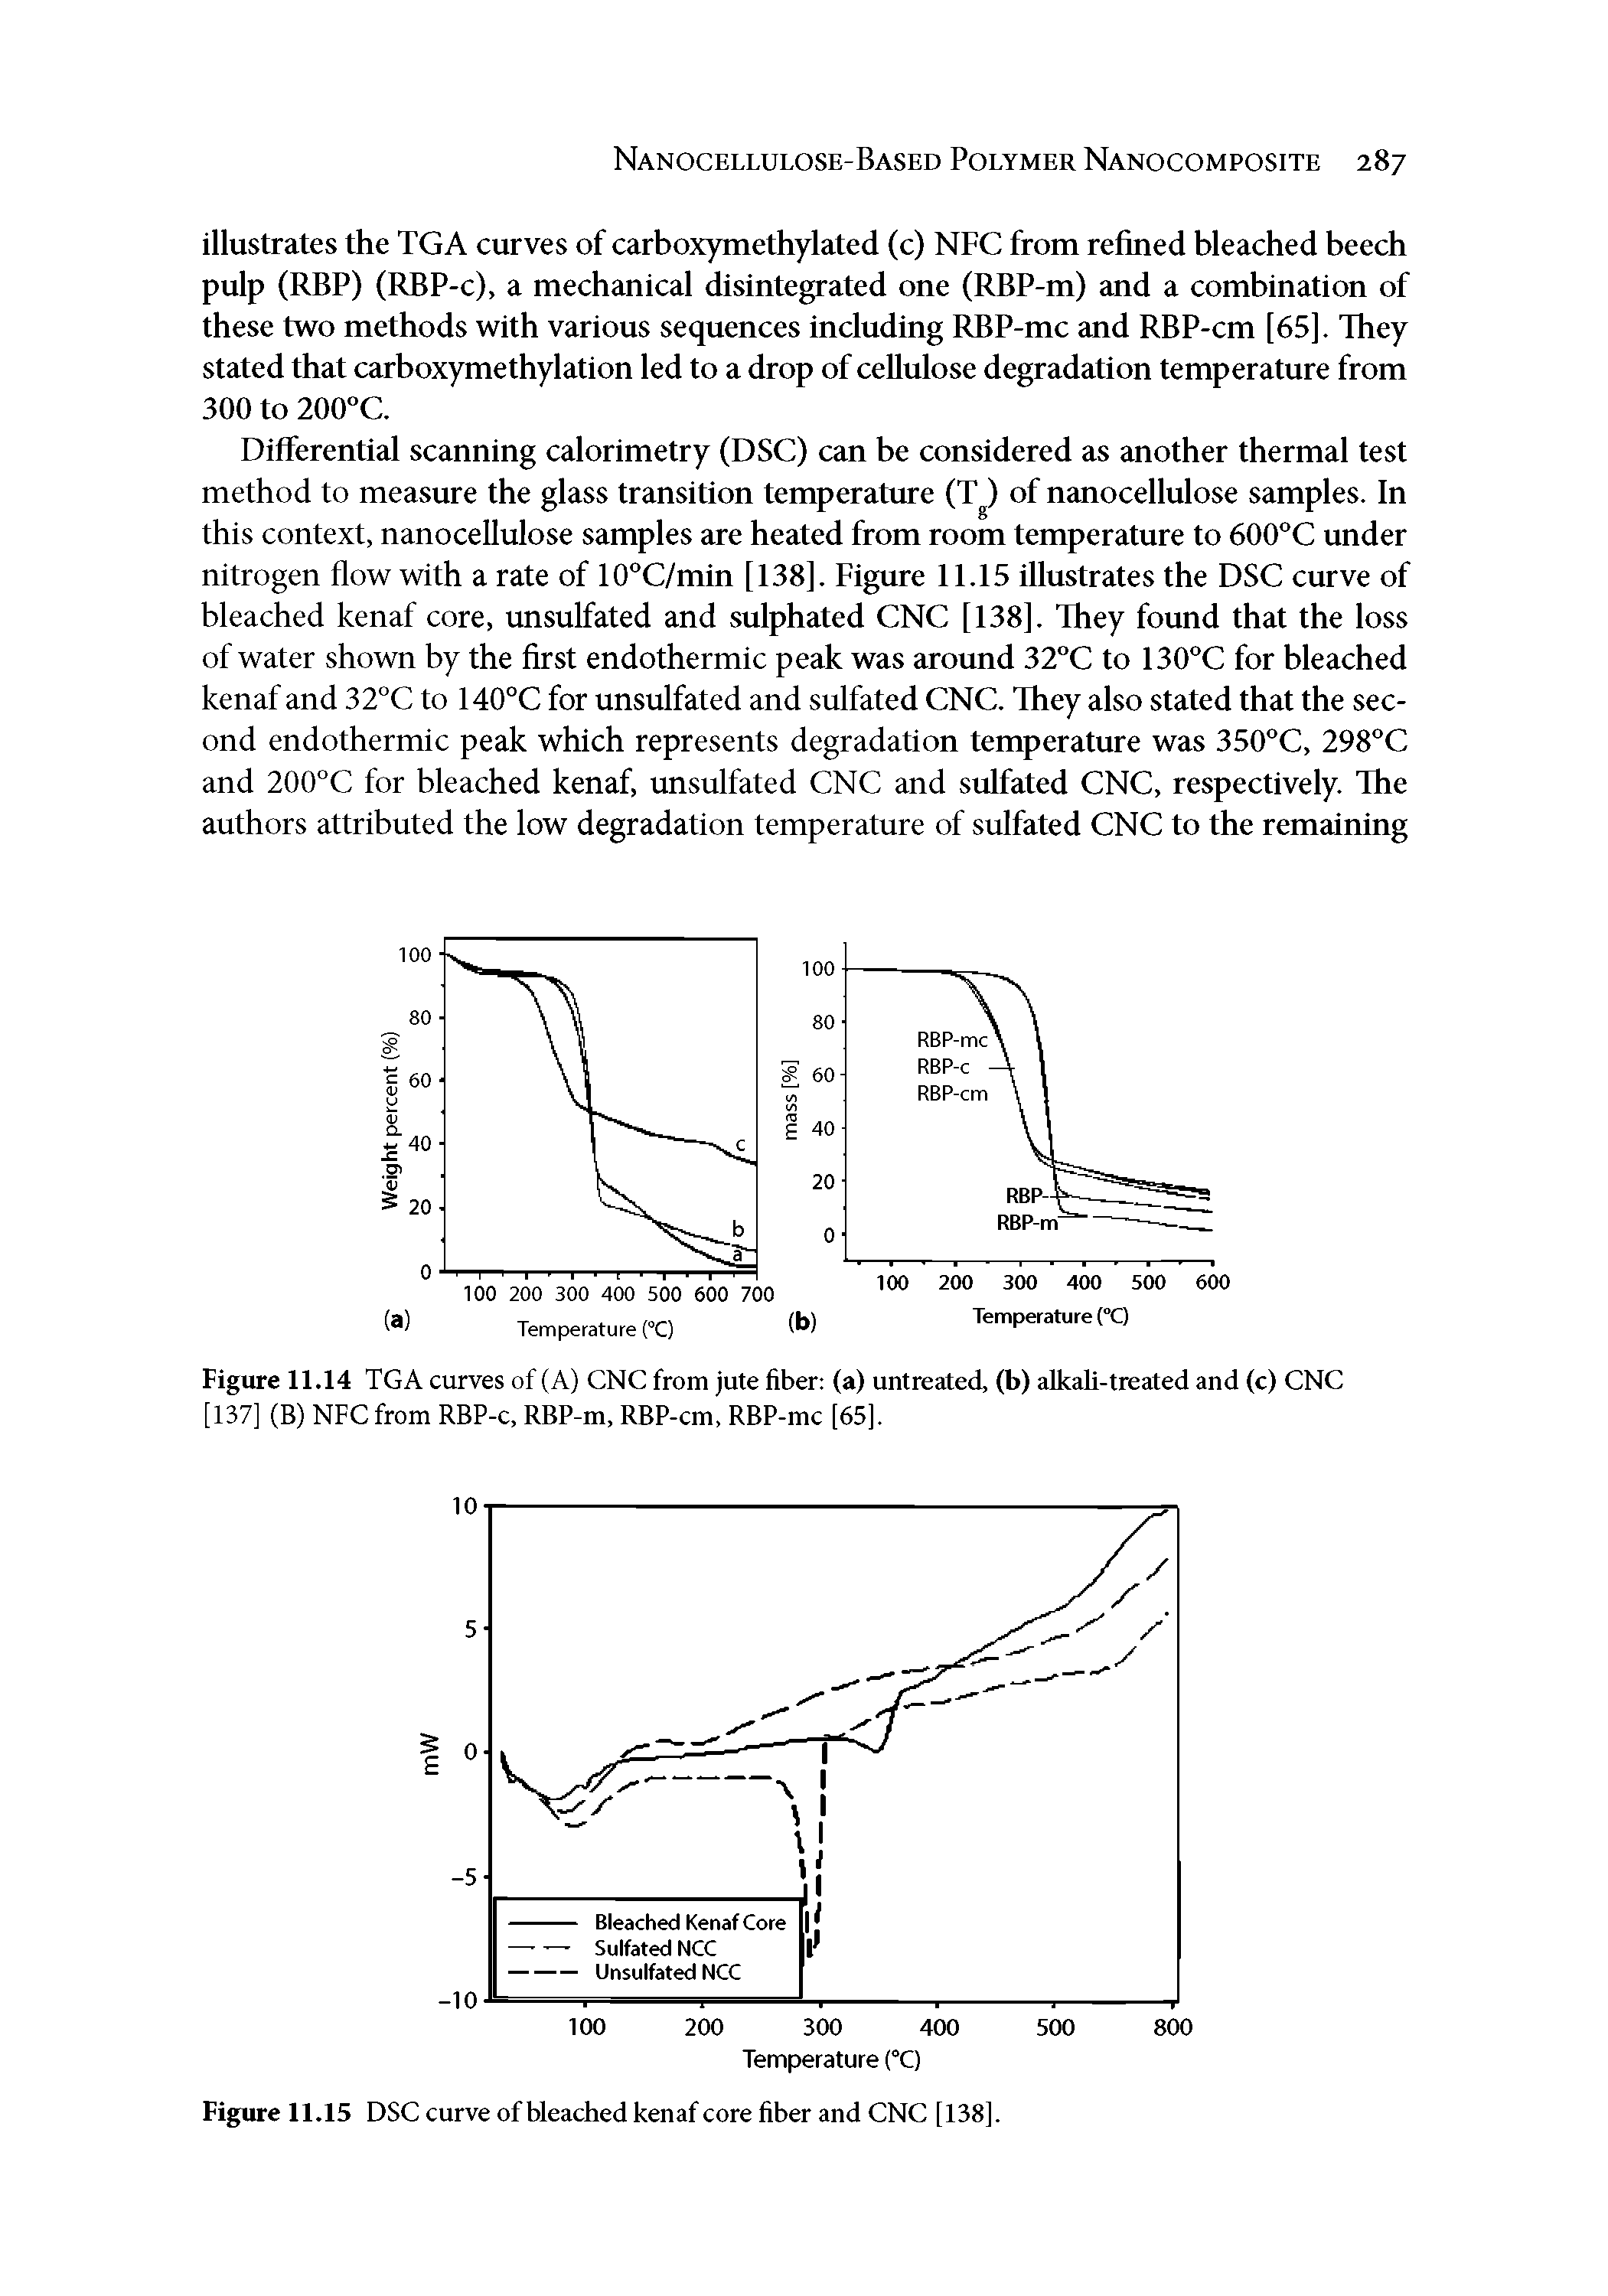 Figure 11.15 DSC curve of bleached kenaf core fiber and CNC [138].